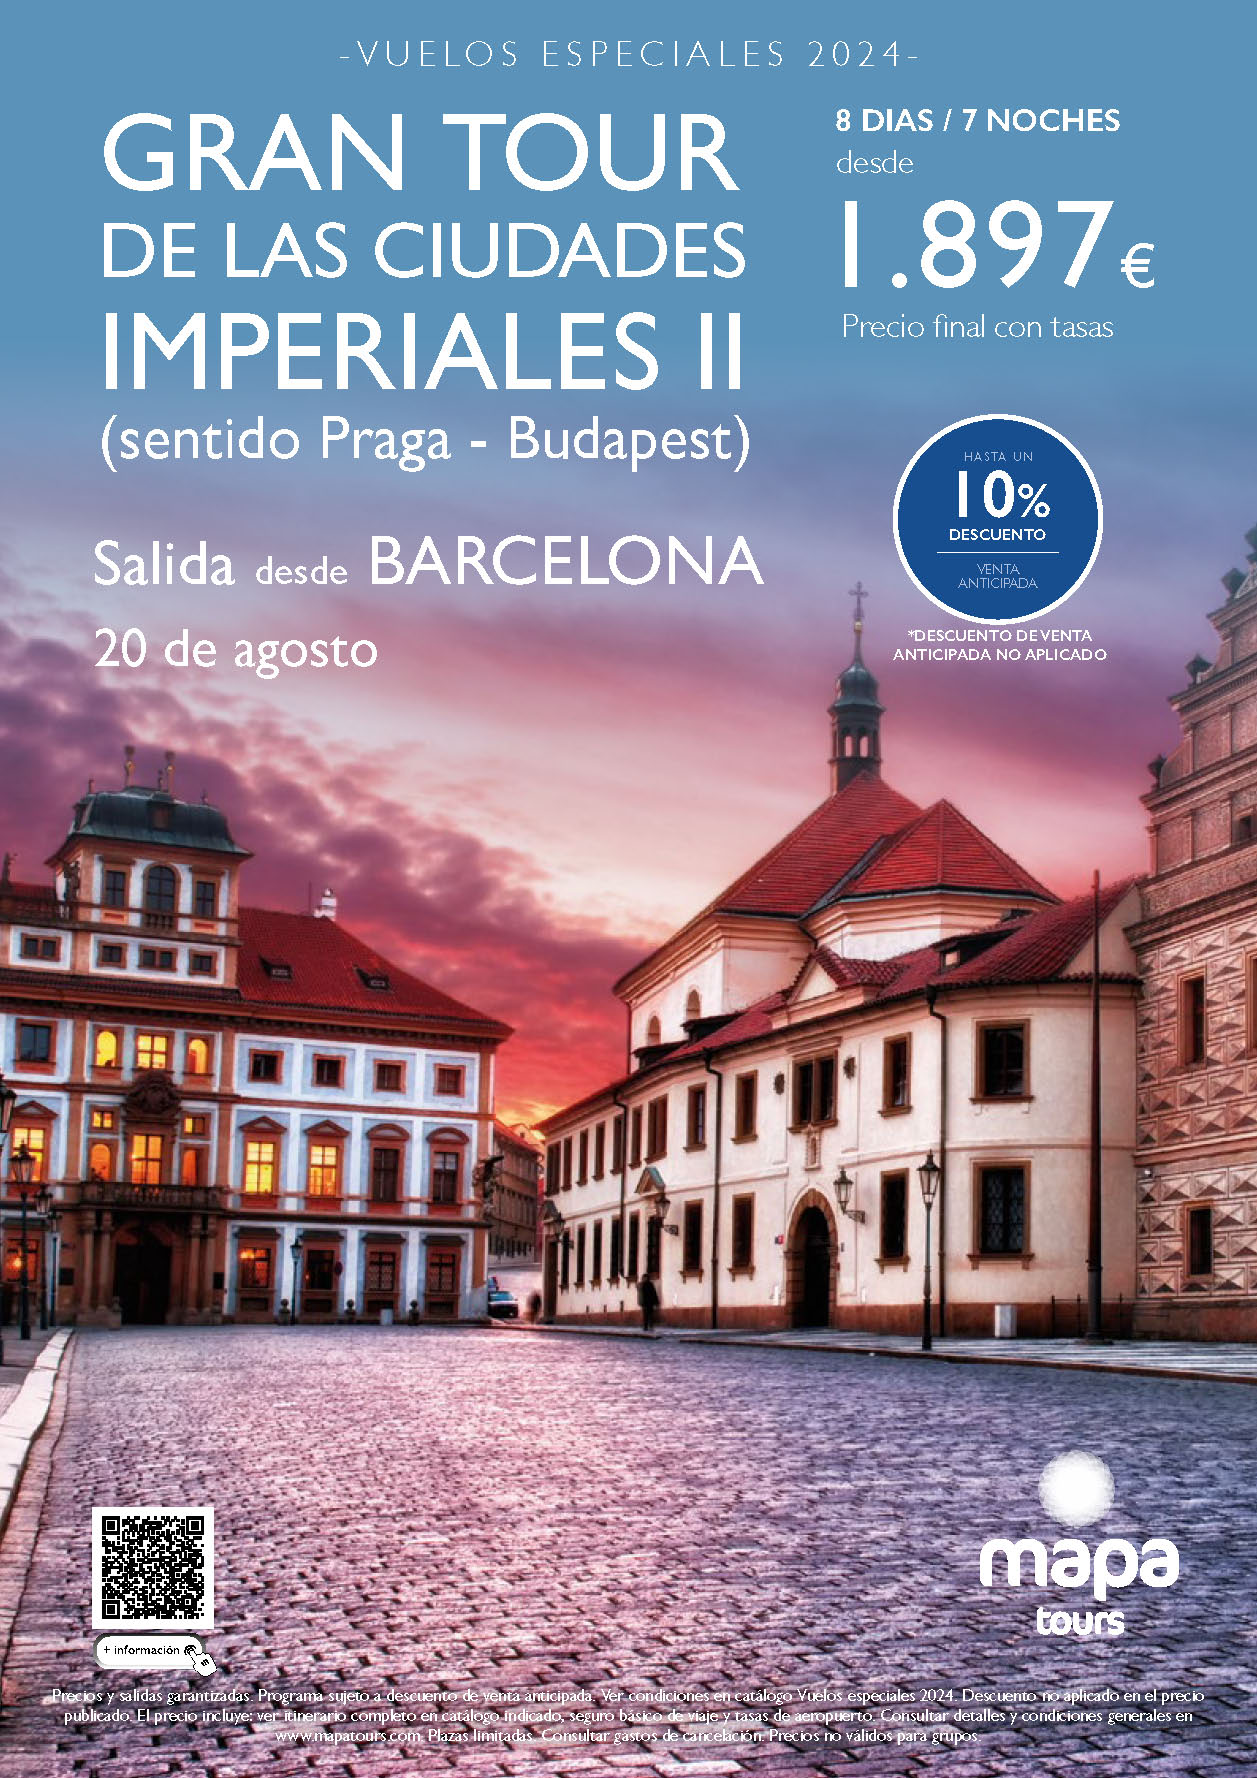 Oferta Mapa Tours circuito Praga Budapest Ciudades Imperiales 8 dias salida 20 Agosto 2024 vuelo especial directo desde Barcelona